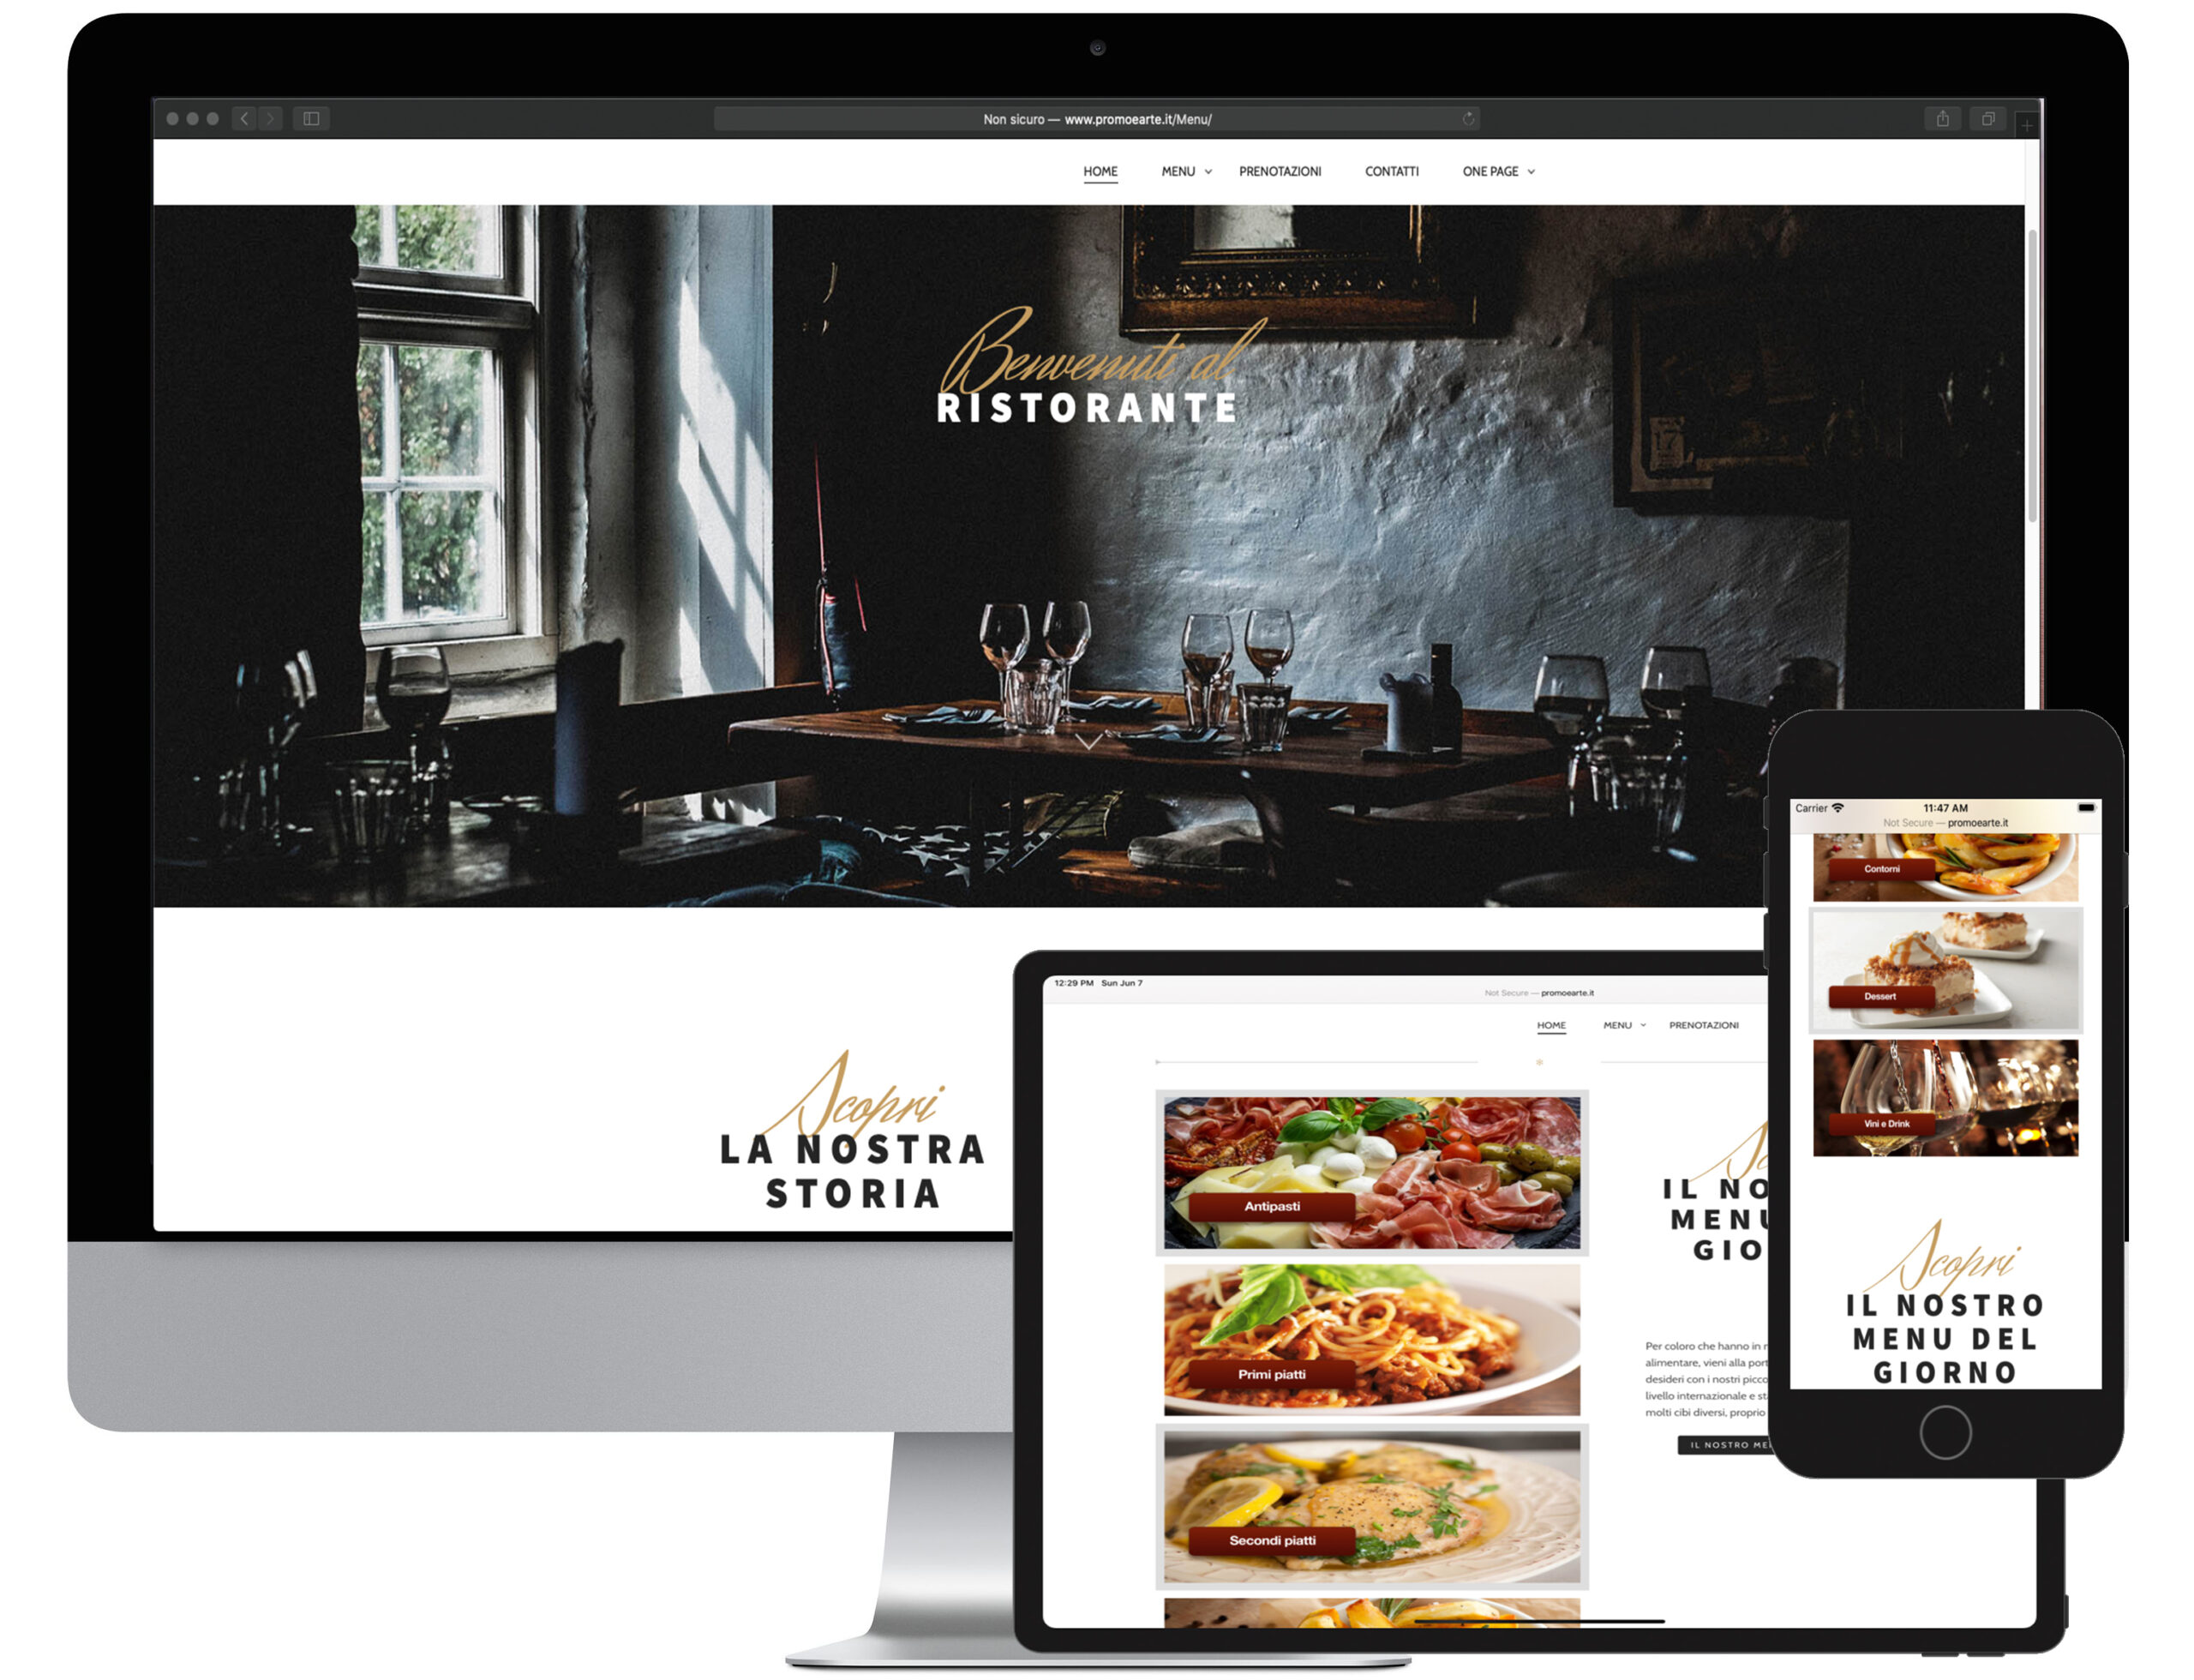 Restaurantmenu en website voor elk apparaat